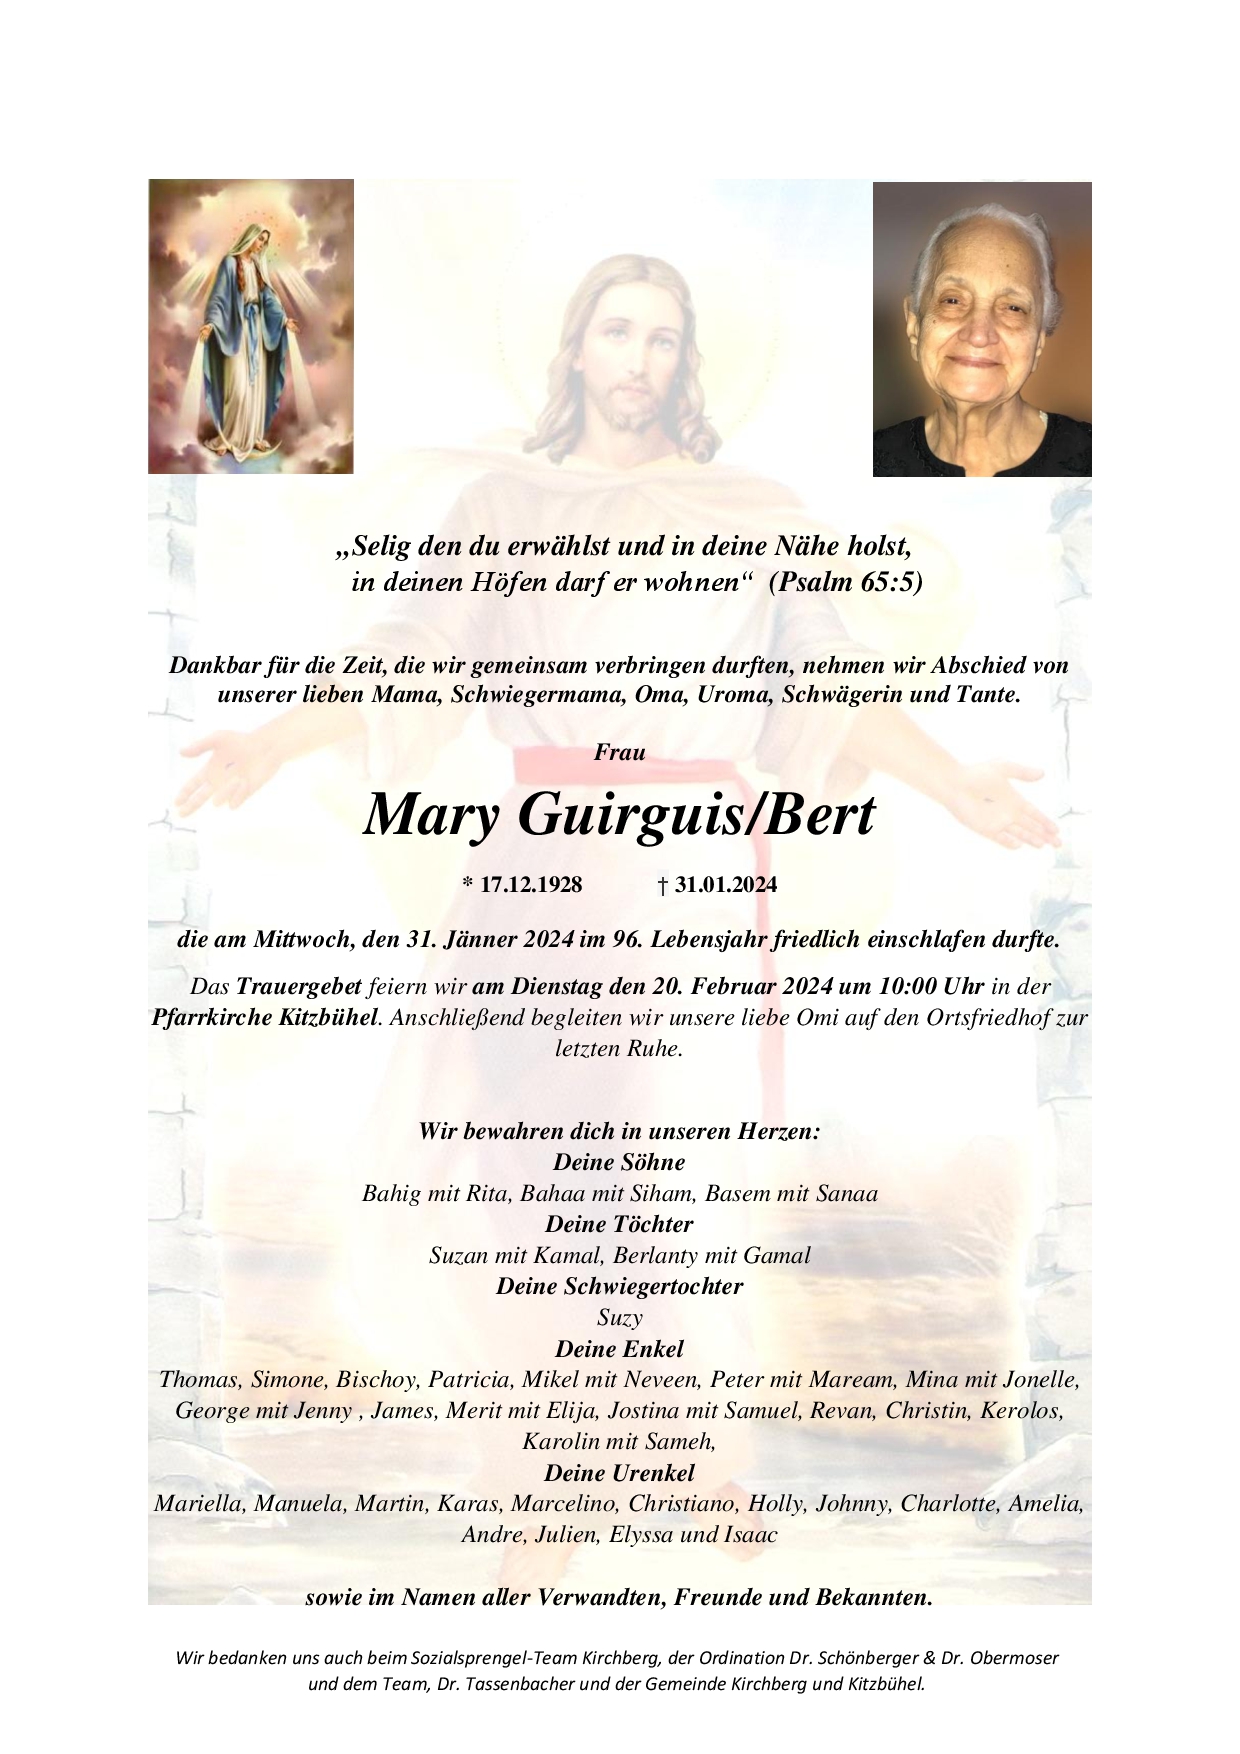 Mary Guirguis Bert